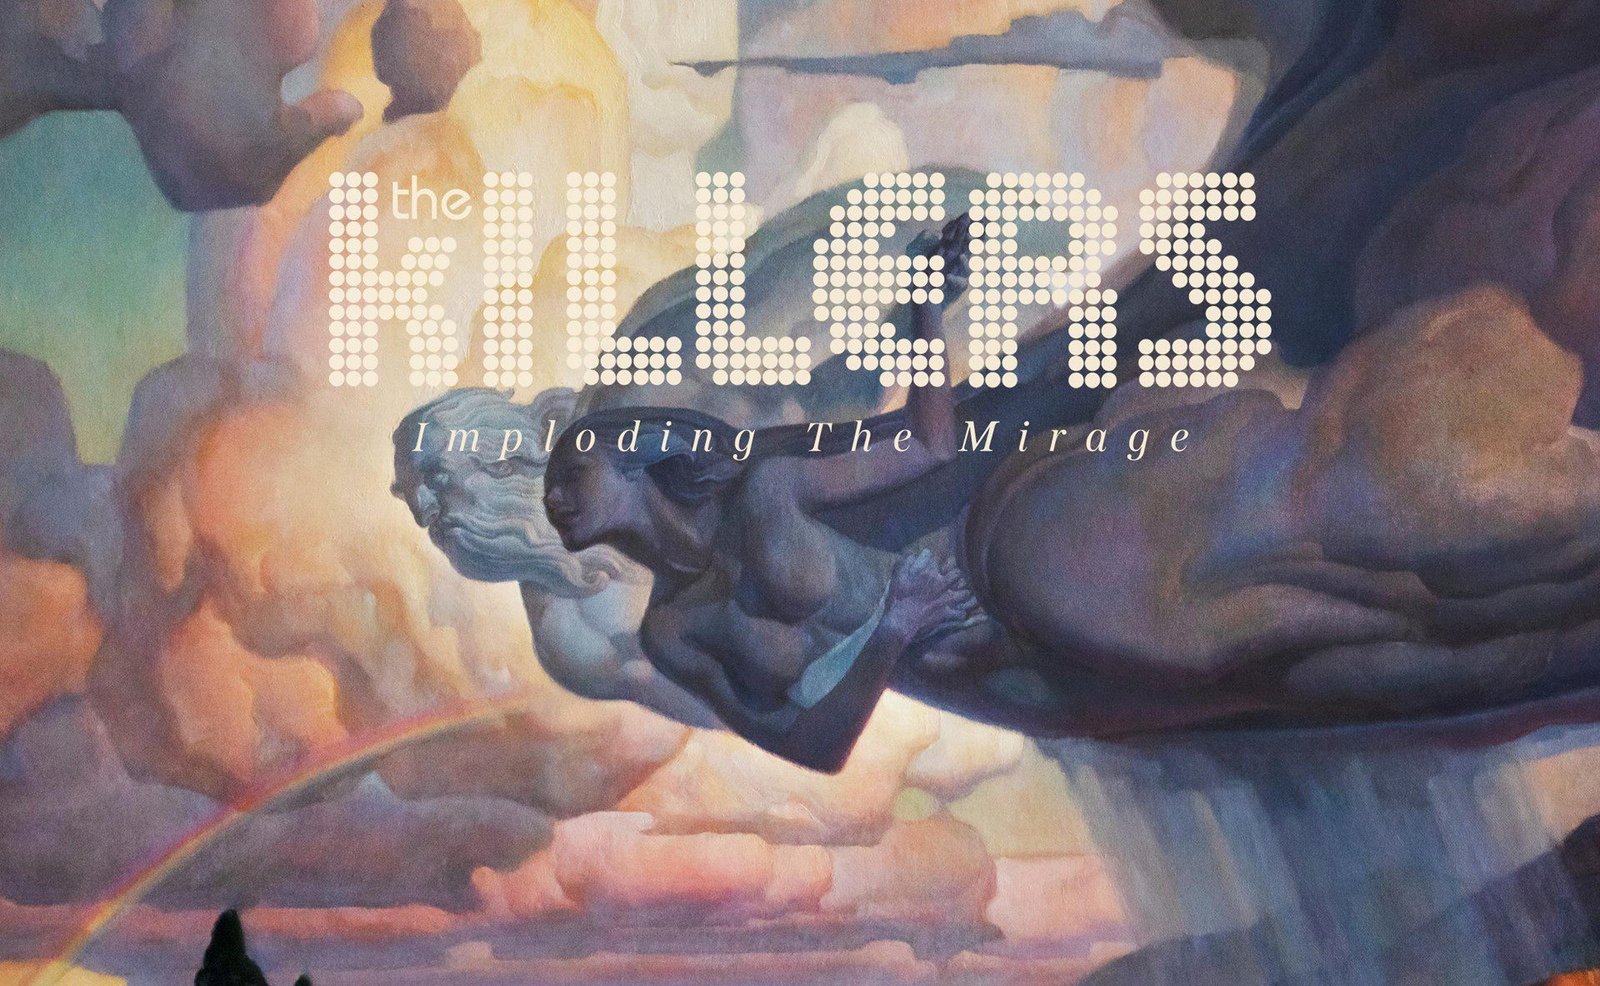 Nuevo disco de the killers Imploding the mirage